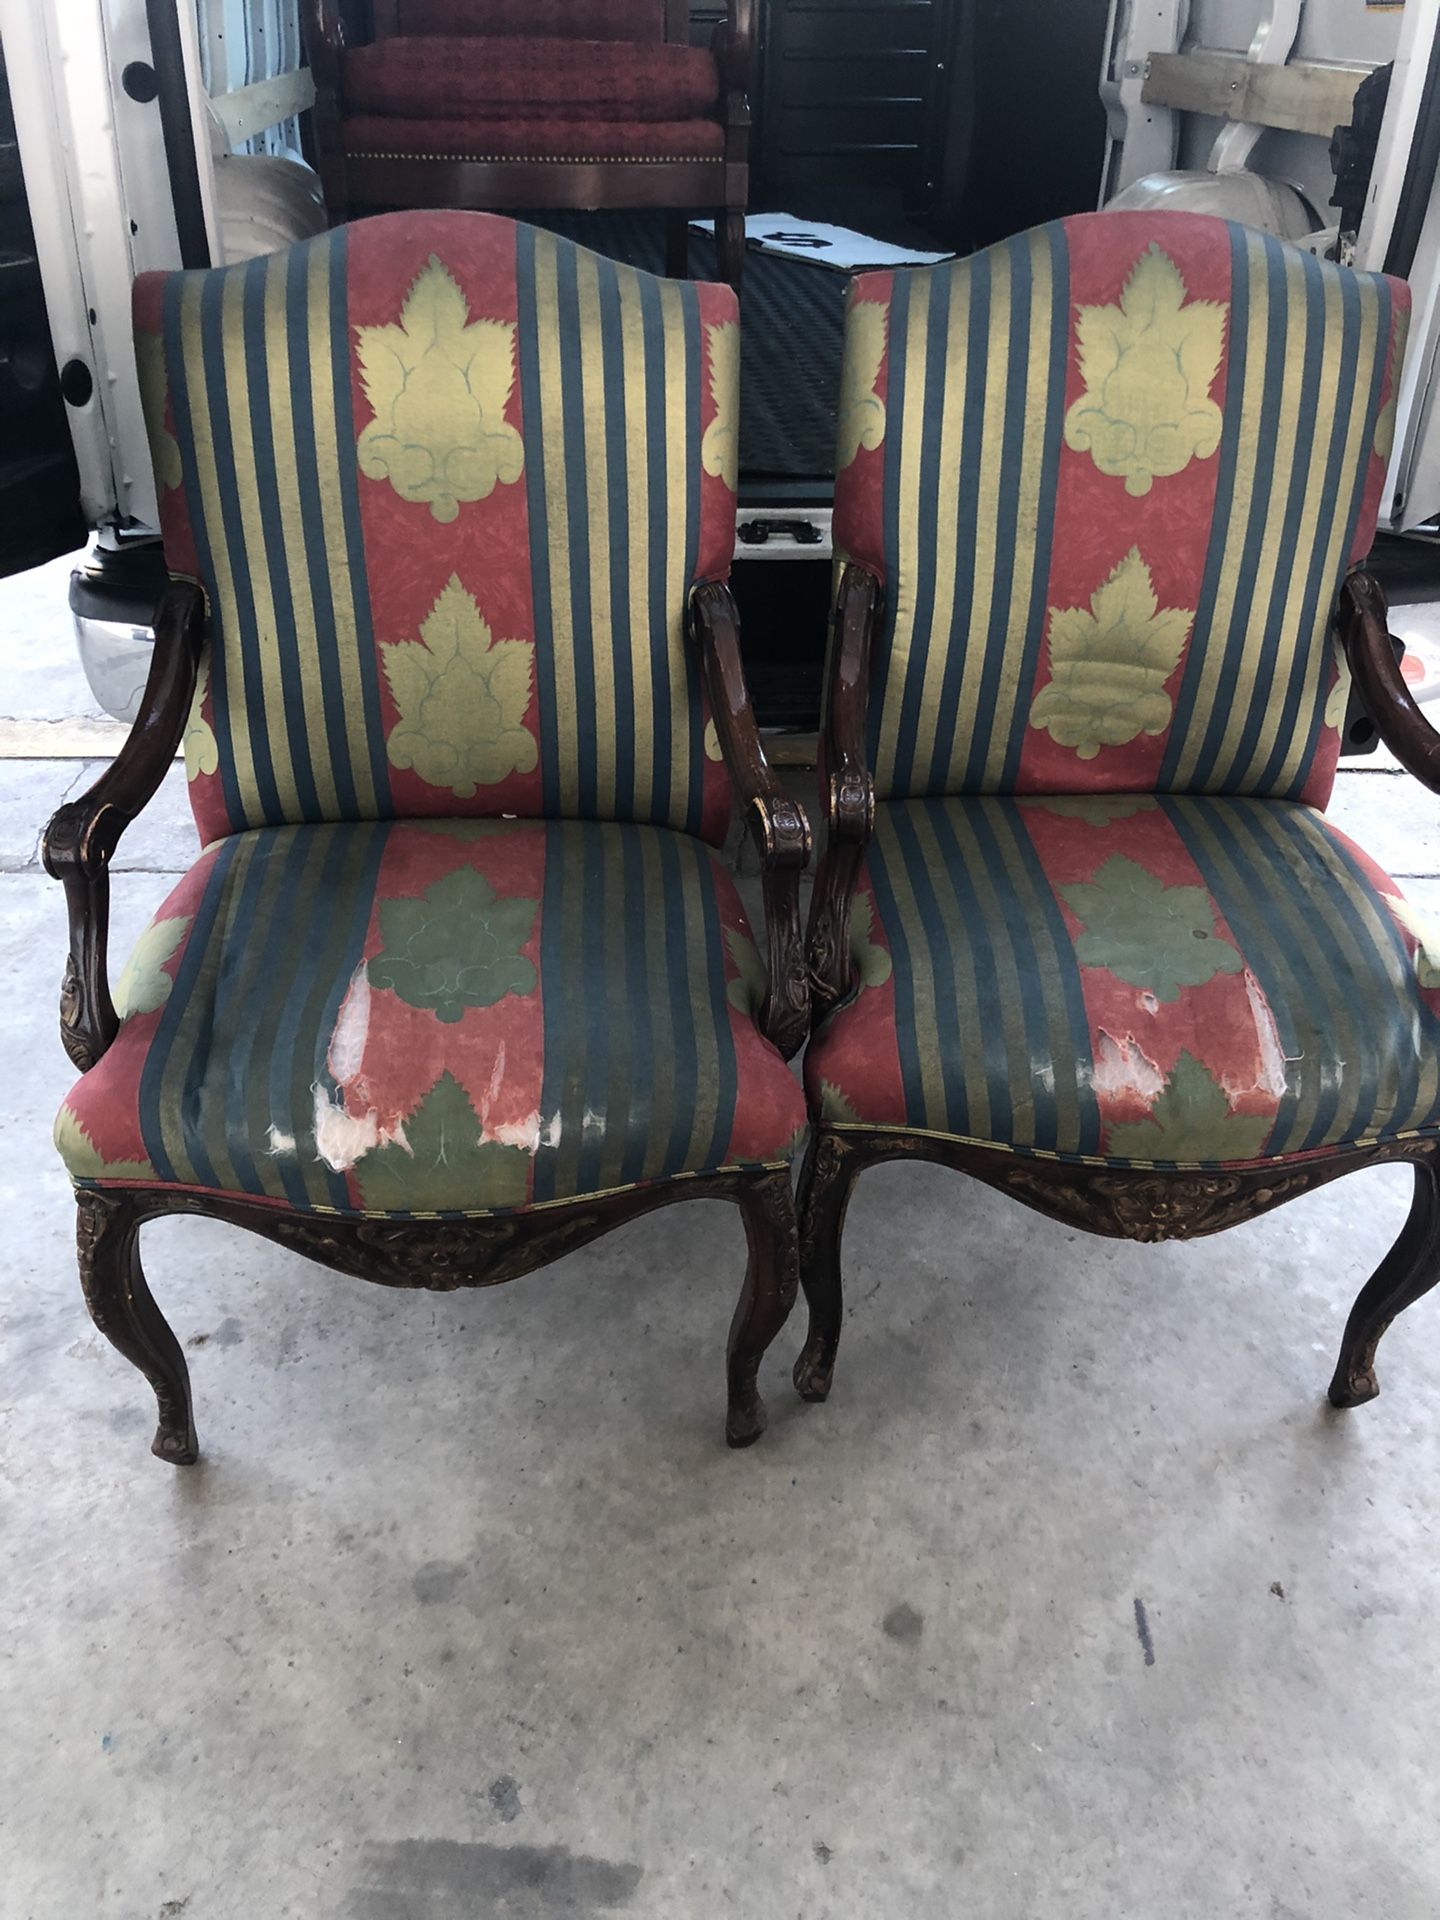 Antique Chairs - $100  pair 